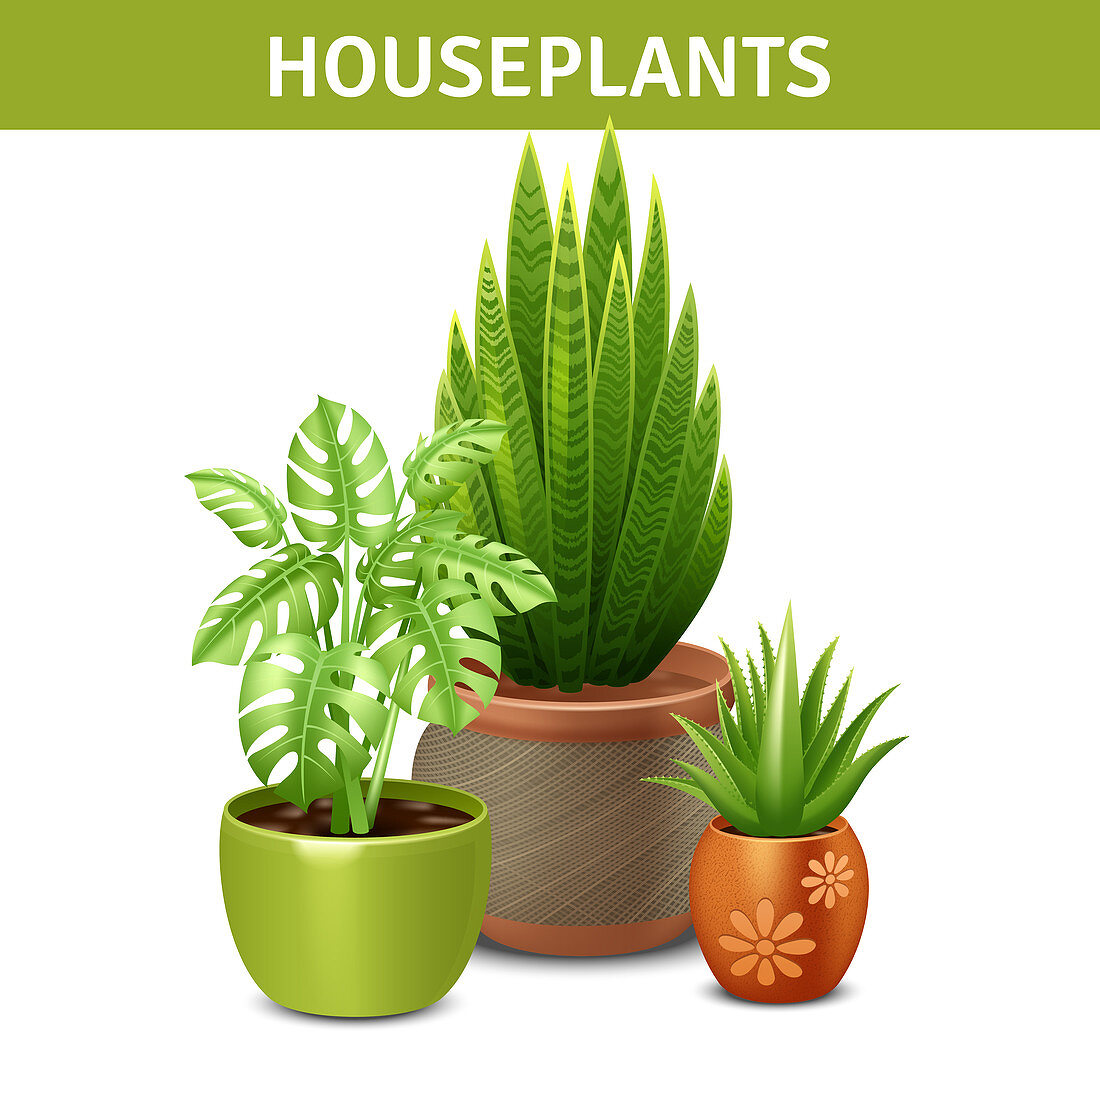 Houseplants, illustration